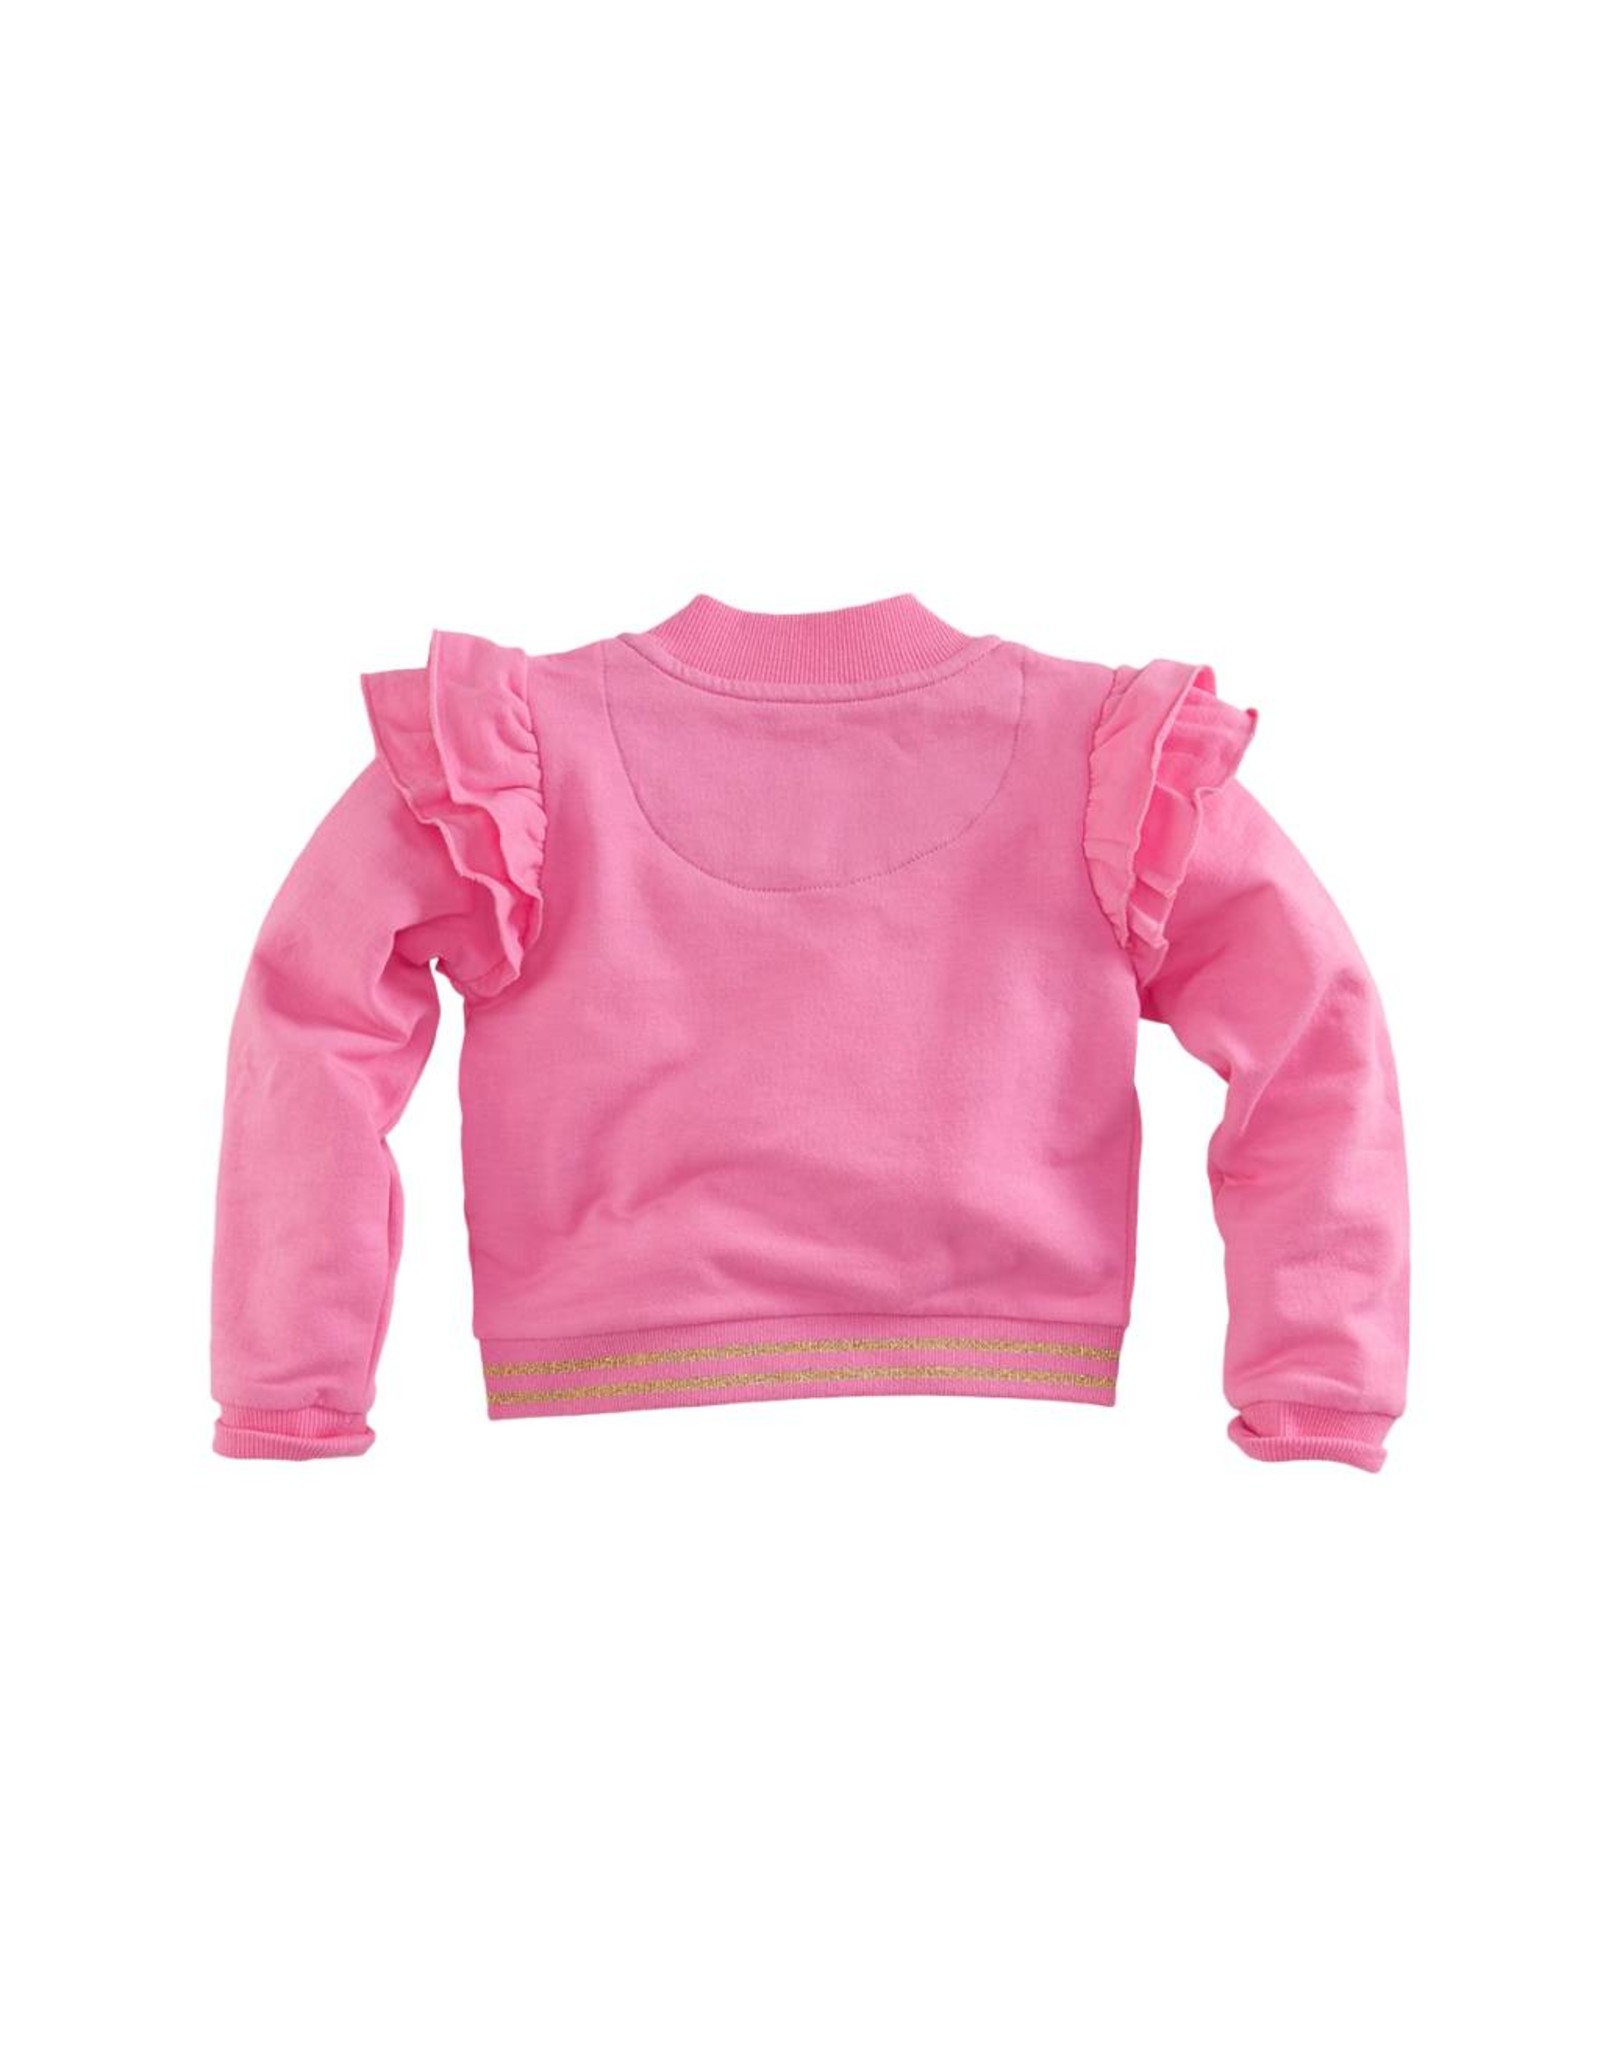 Rubber kiezen Controverse Vest Fabienne popping pink - Bij Broer & Zus